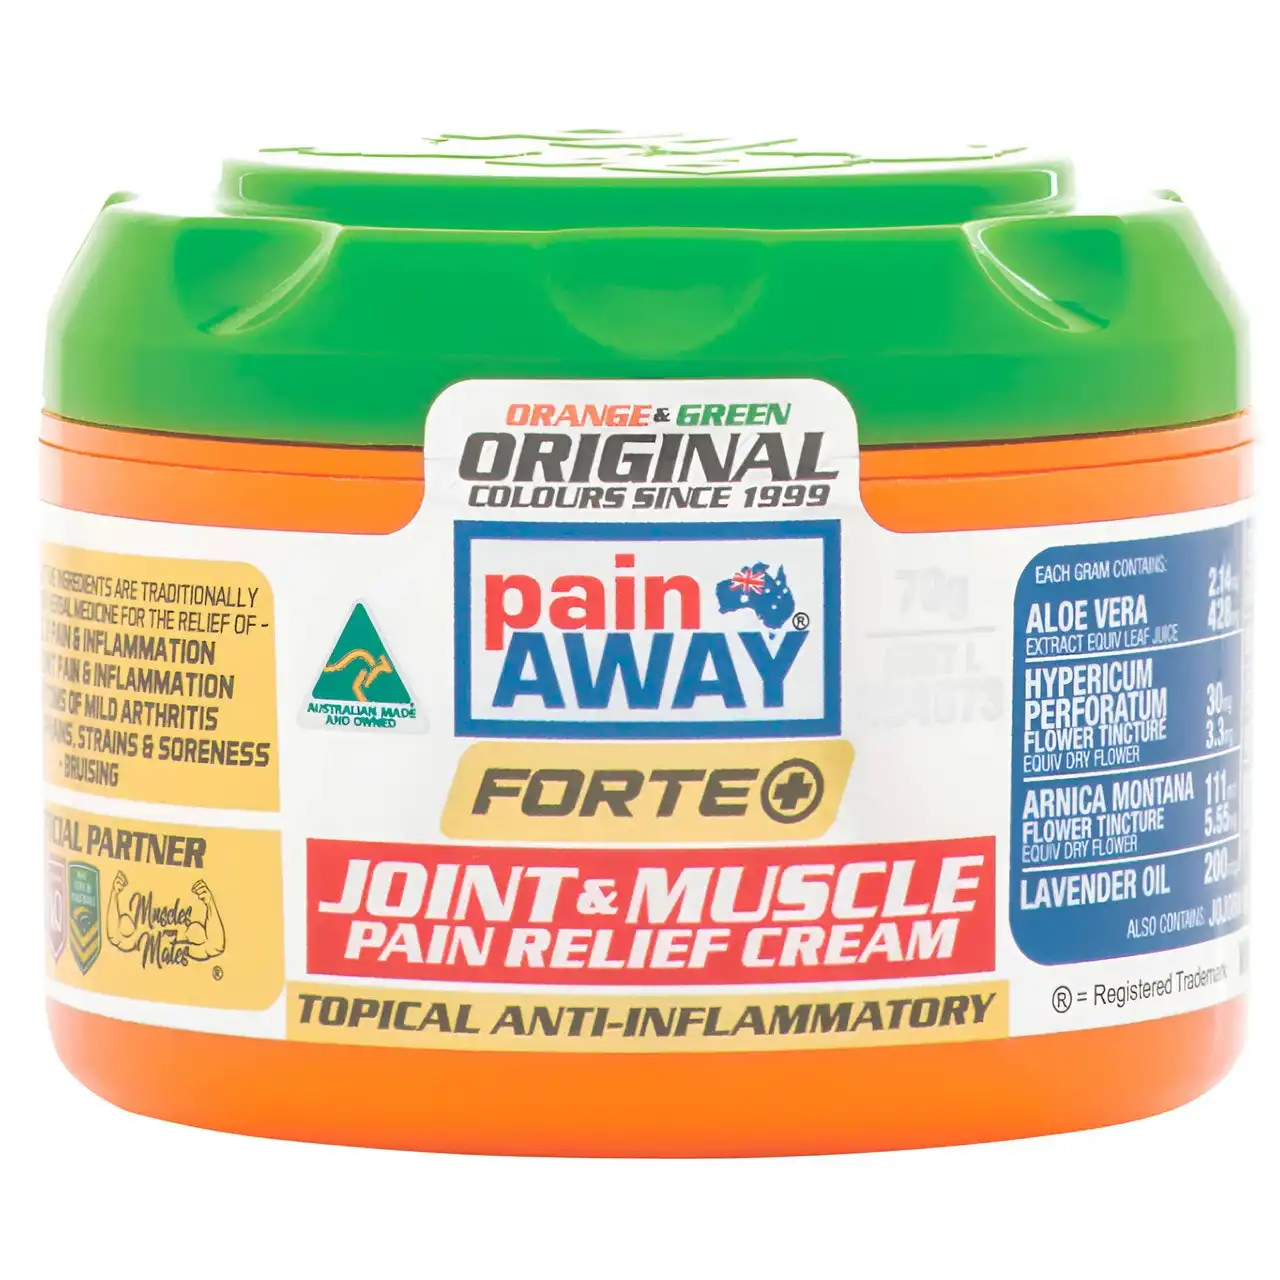 Pain Away Forte + Original Pain Relief Cream 70g